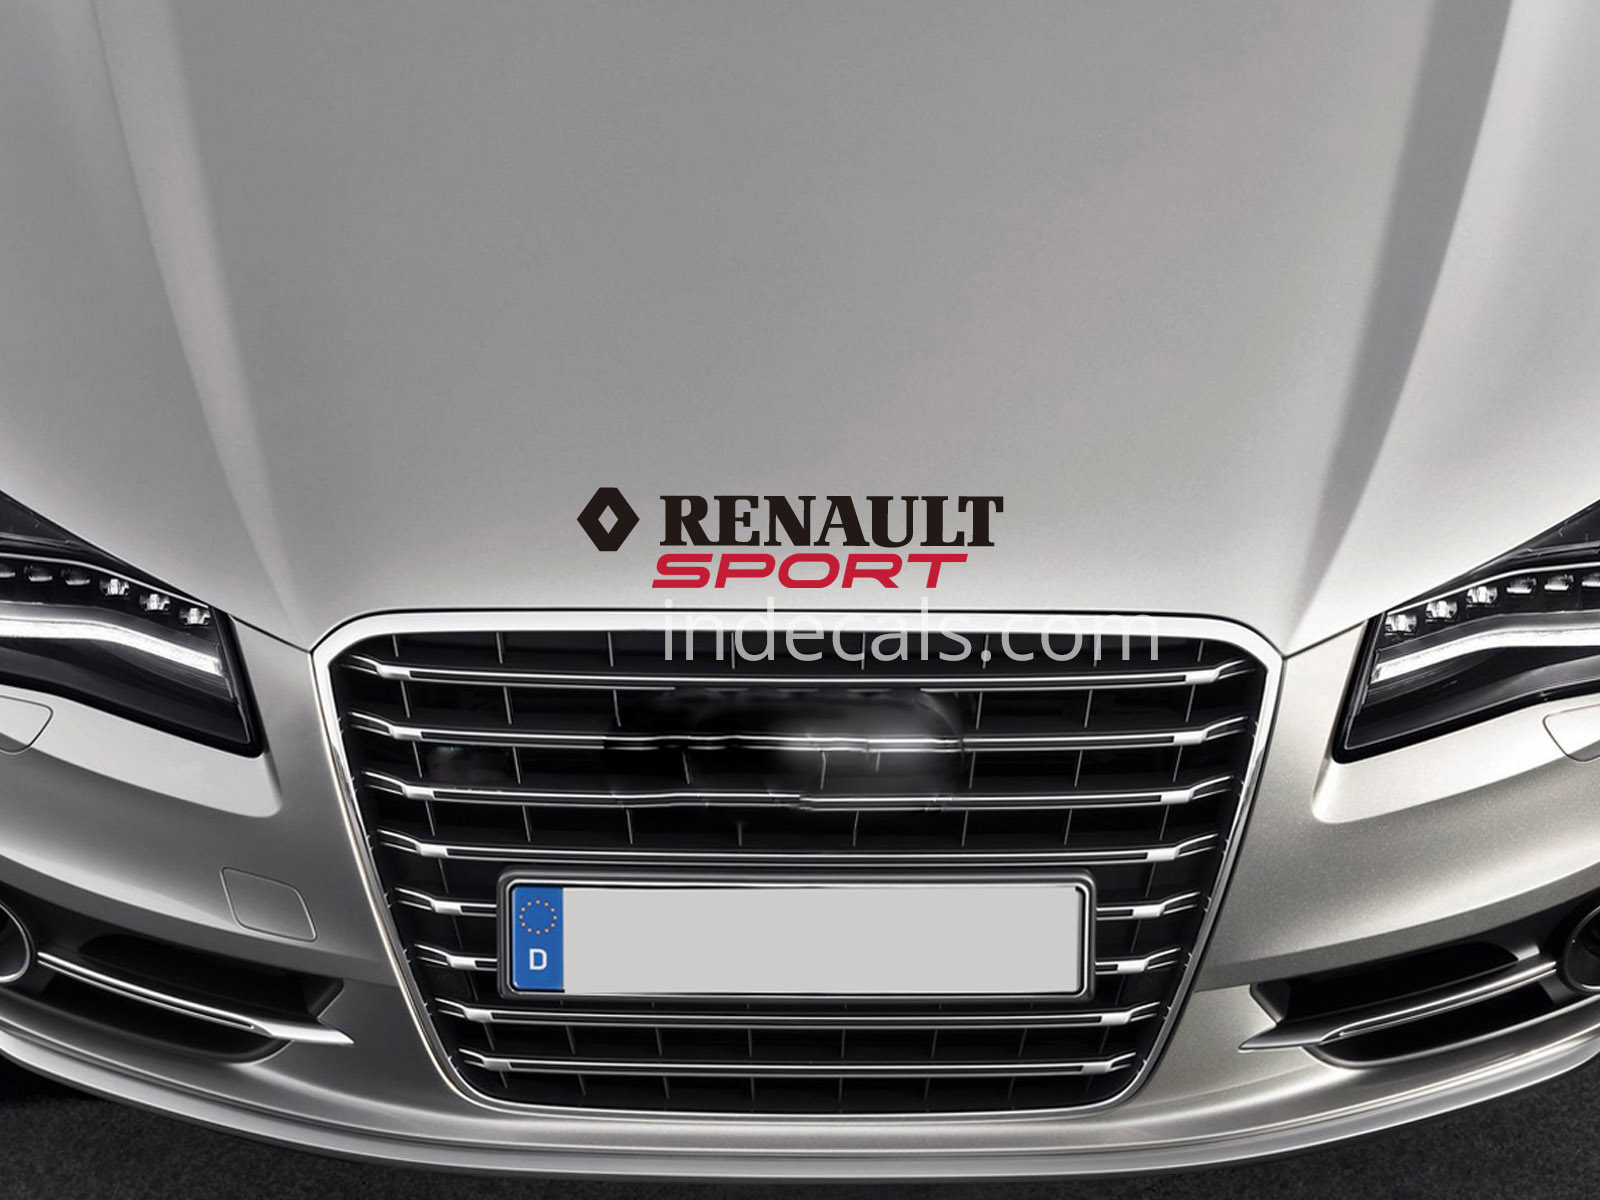 1 x Renault Sport Sticker for Bonnet - Black & Red